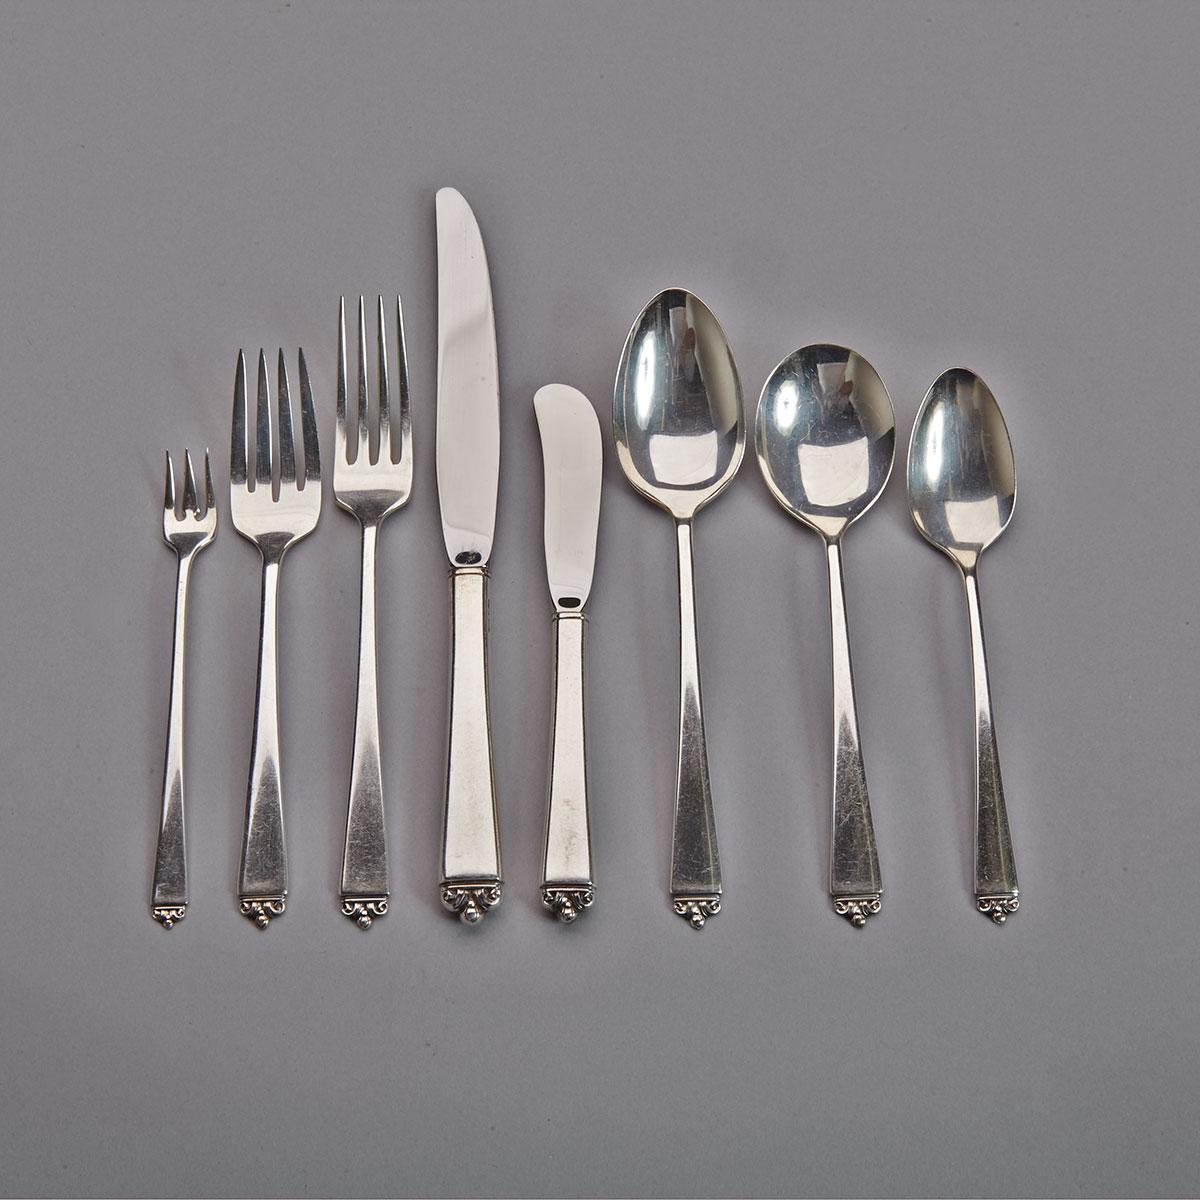 American Silver Heirloom ‘Reigning Beauty’ Pattern Flatware Service, Oneida Silversmiths, Sherrill, N.Y., mid-20th century